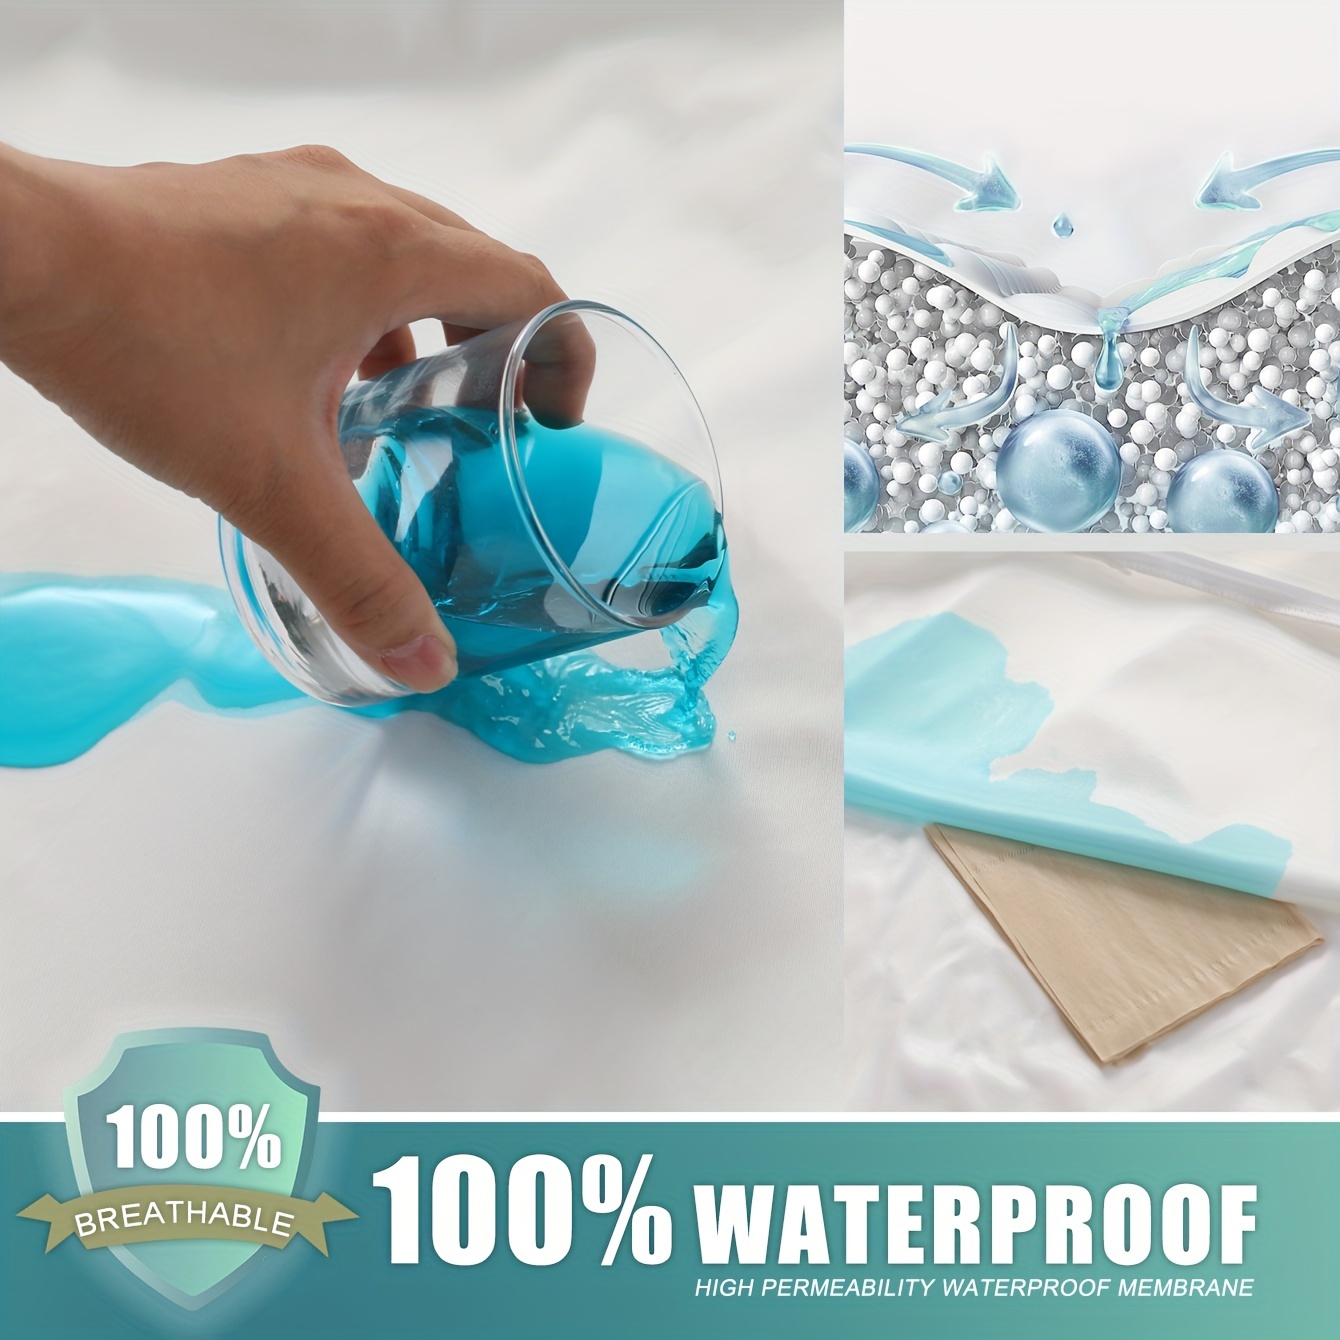 100% Waterproof Mattress Protector